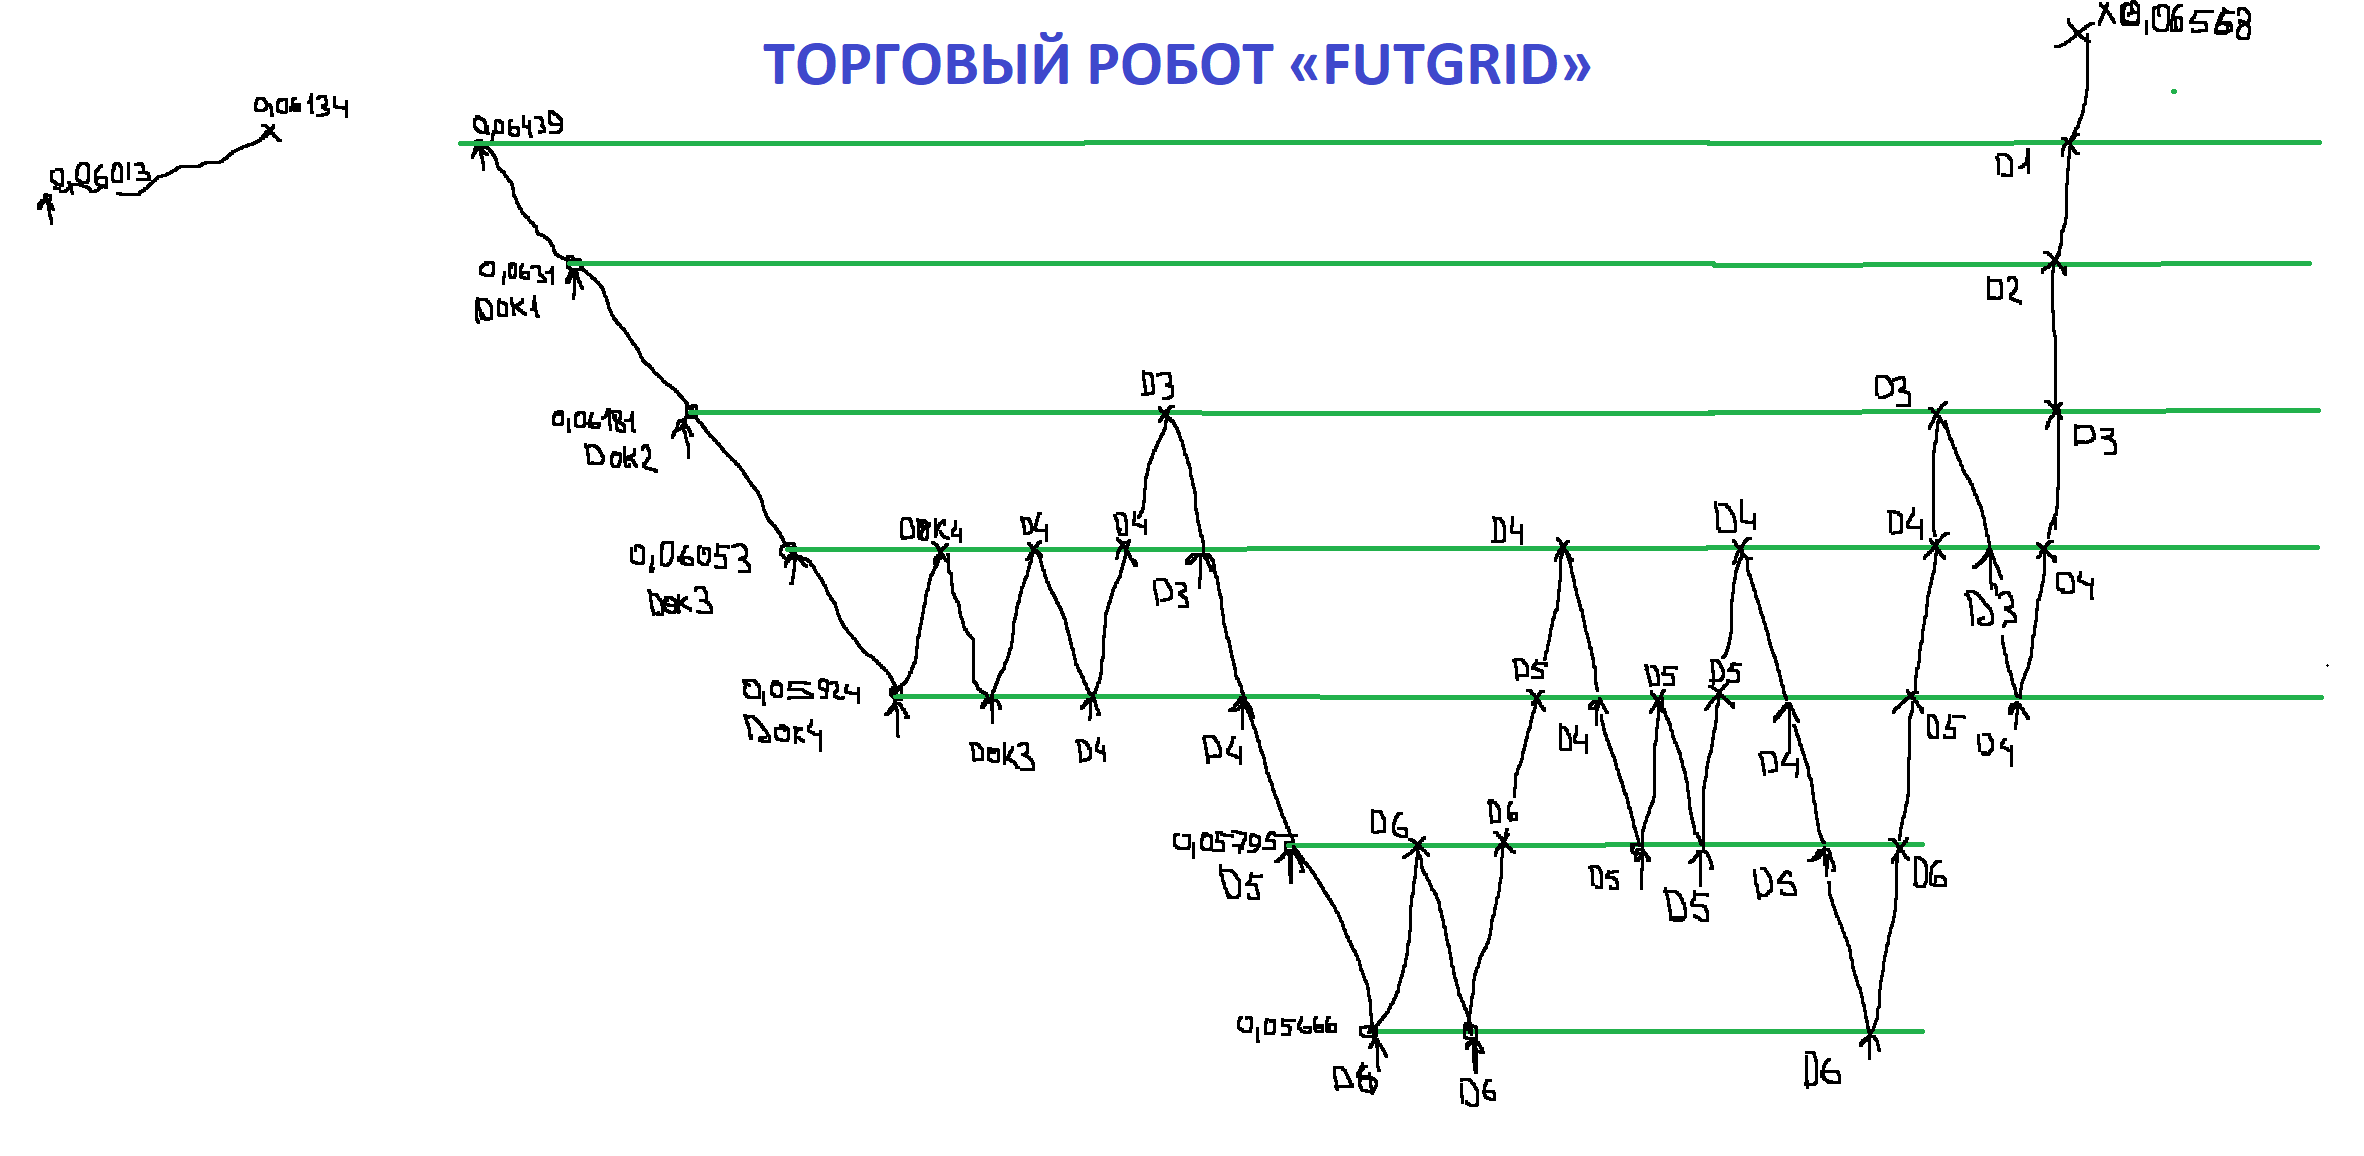 Grid-FutGrid-OKX